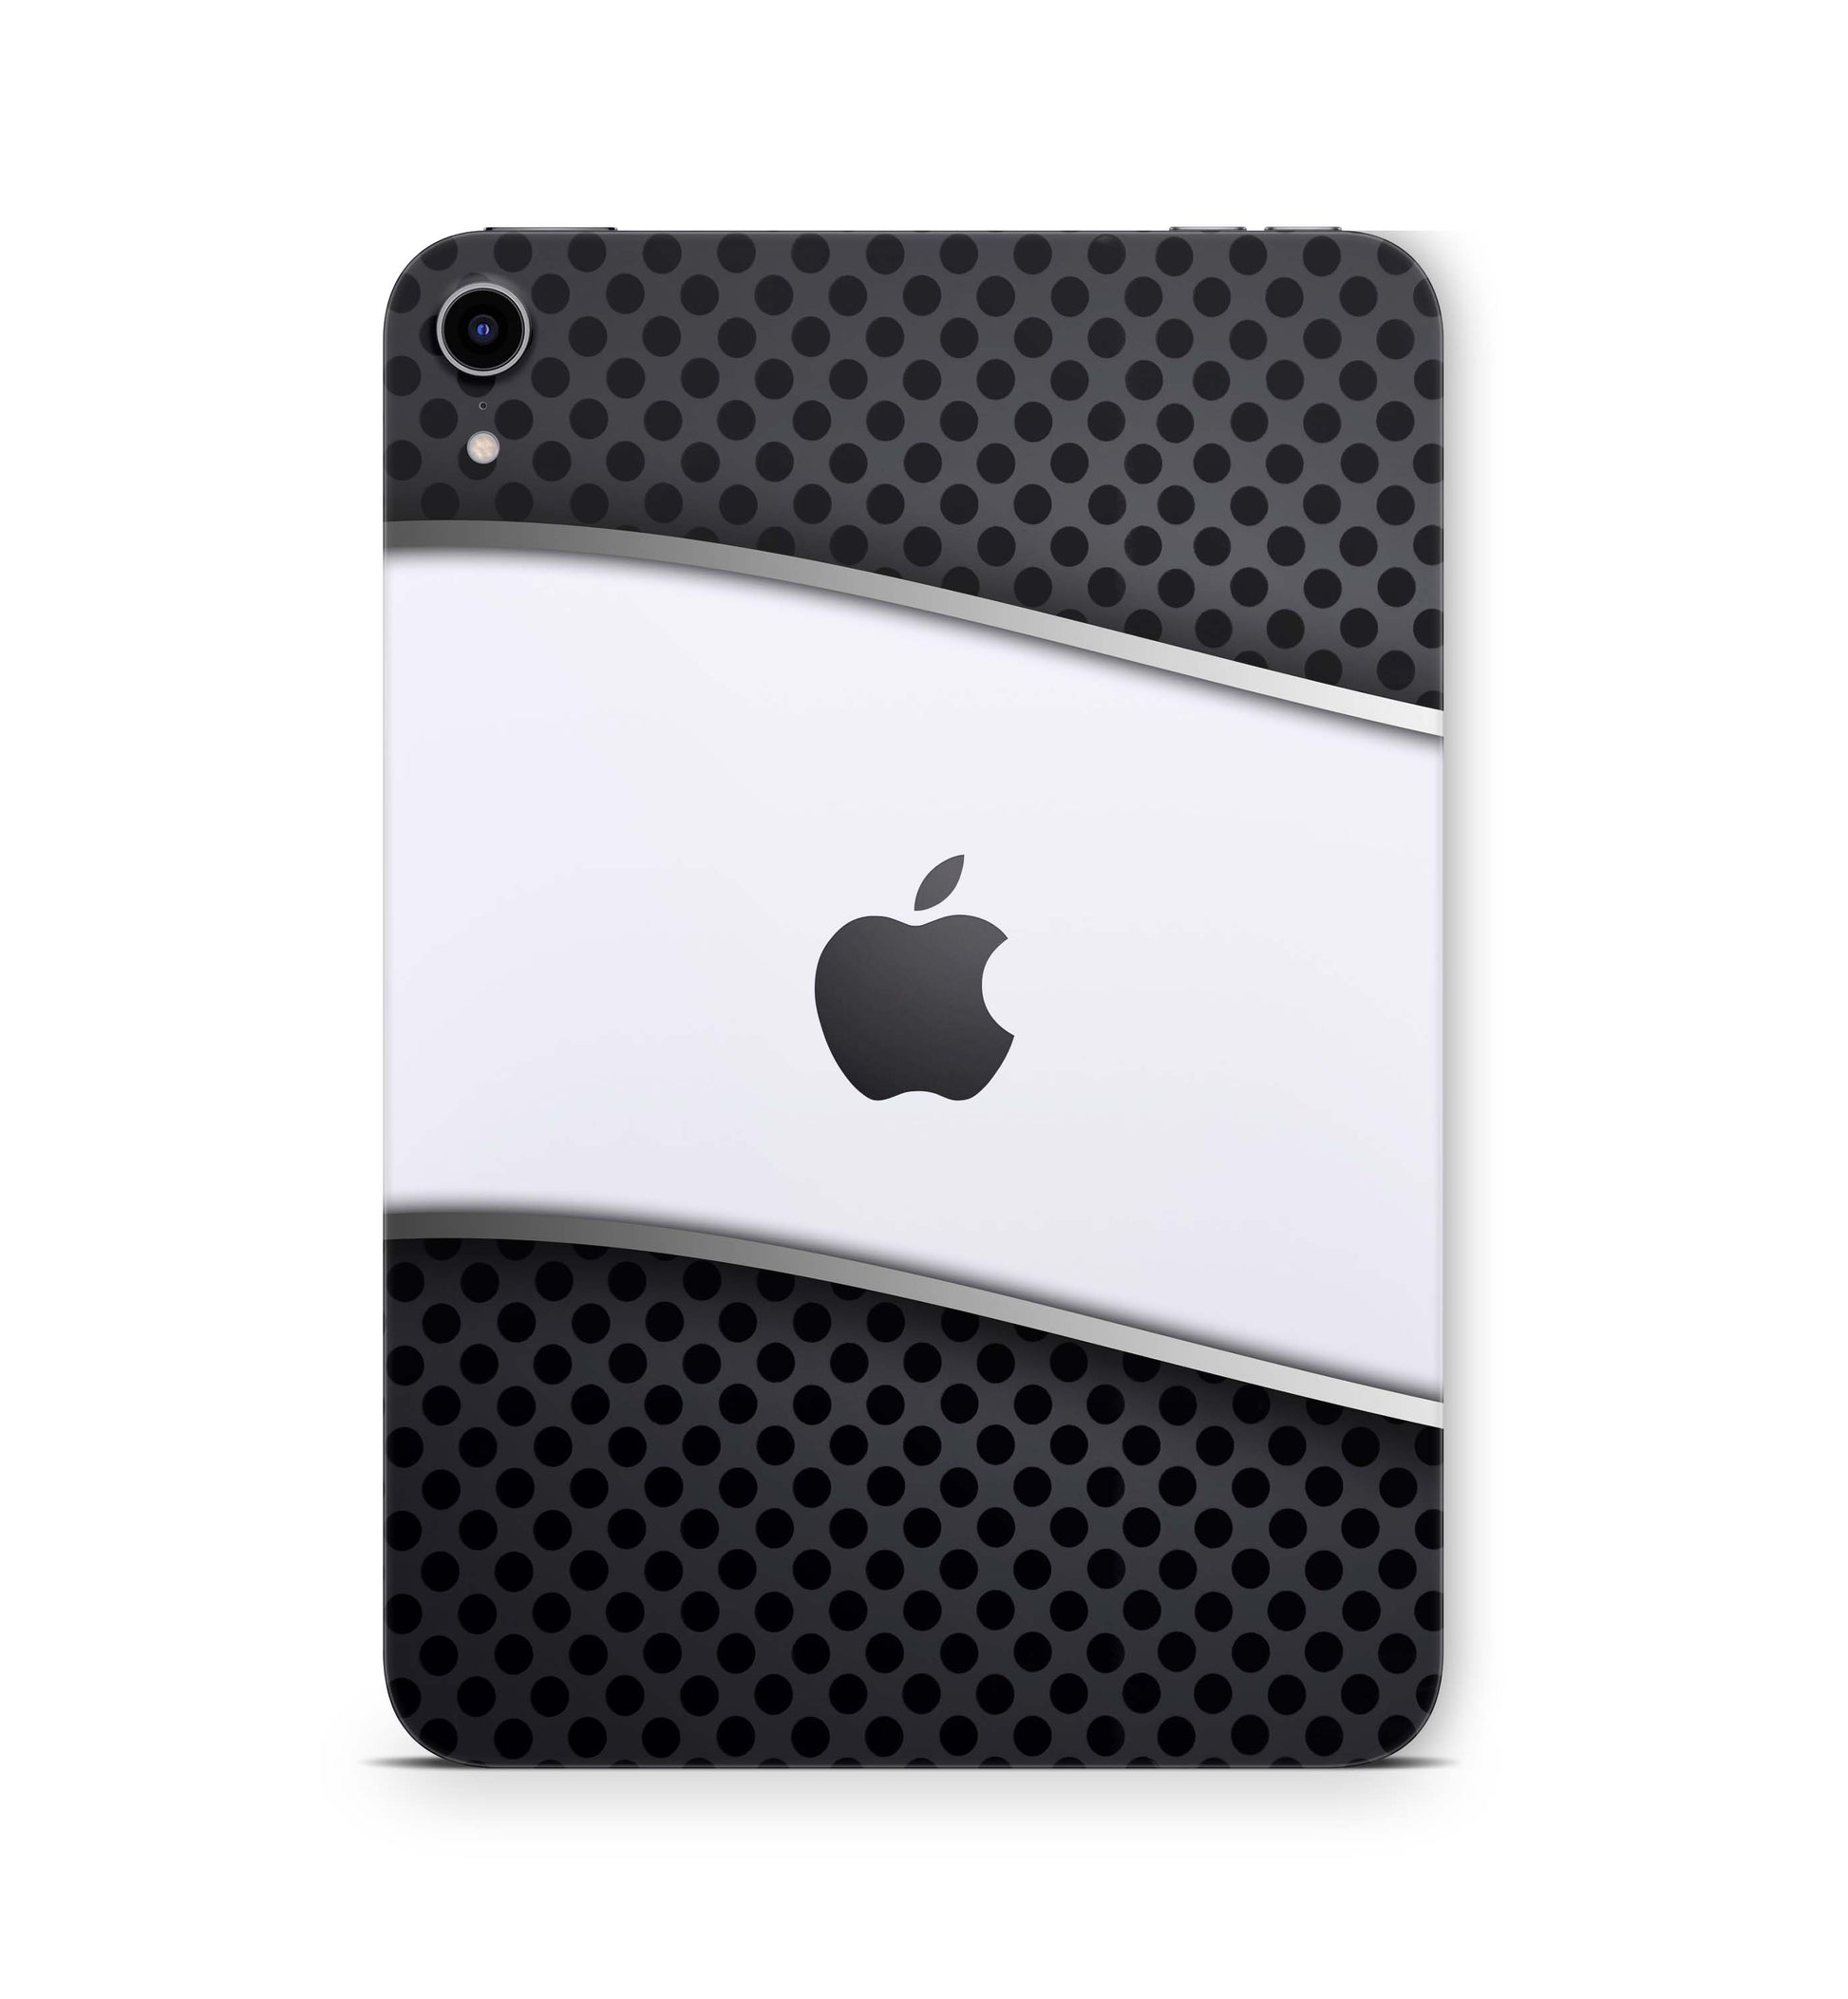 iPad Air Skin Design Cover Folie Vinyl Skins & Wraps für alle iPad Air Modelle Aufkleber Skins4u Metal-Stripe  